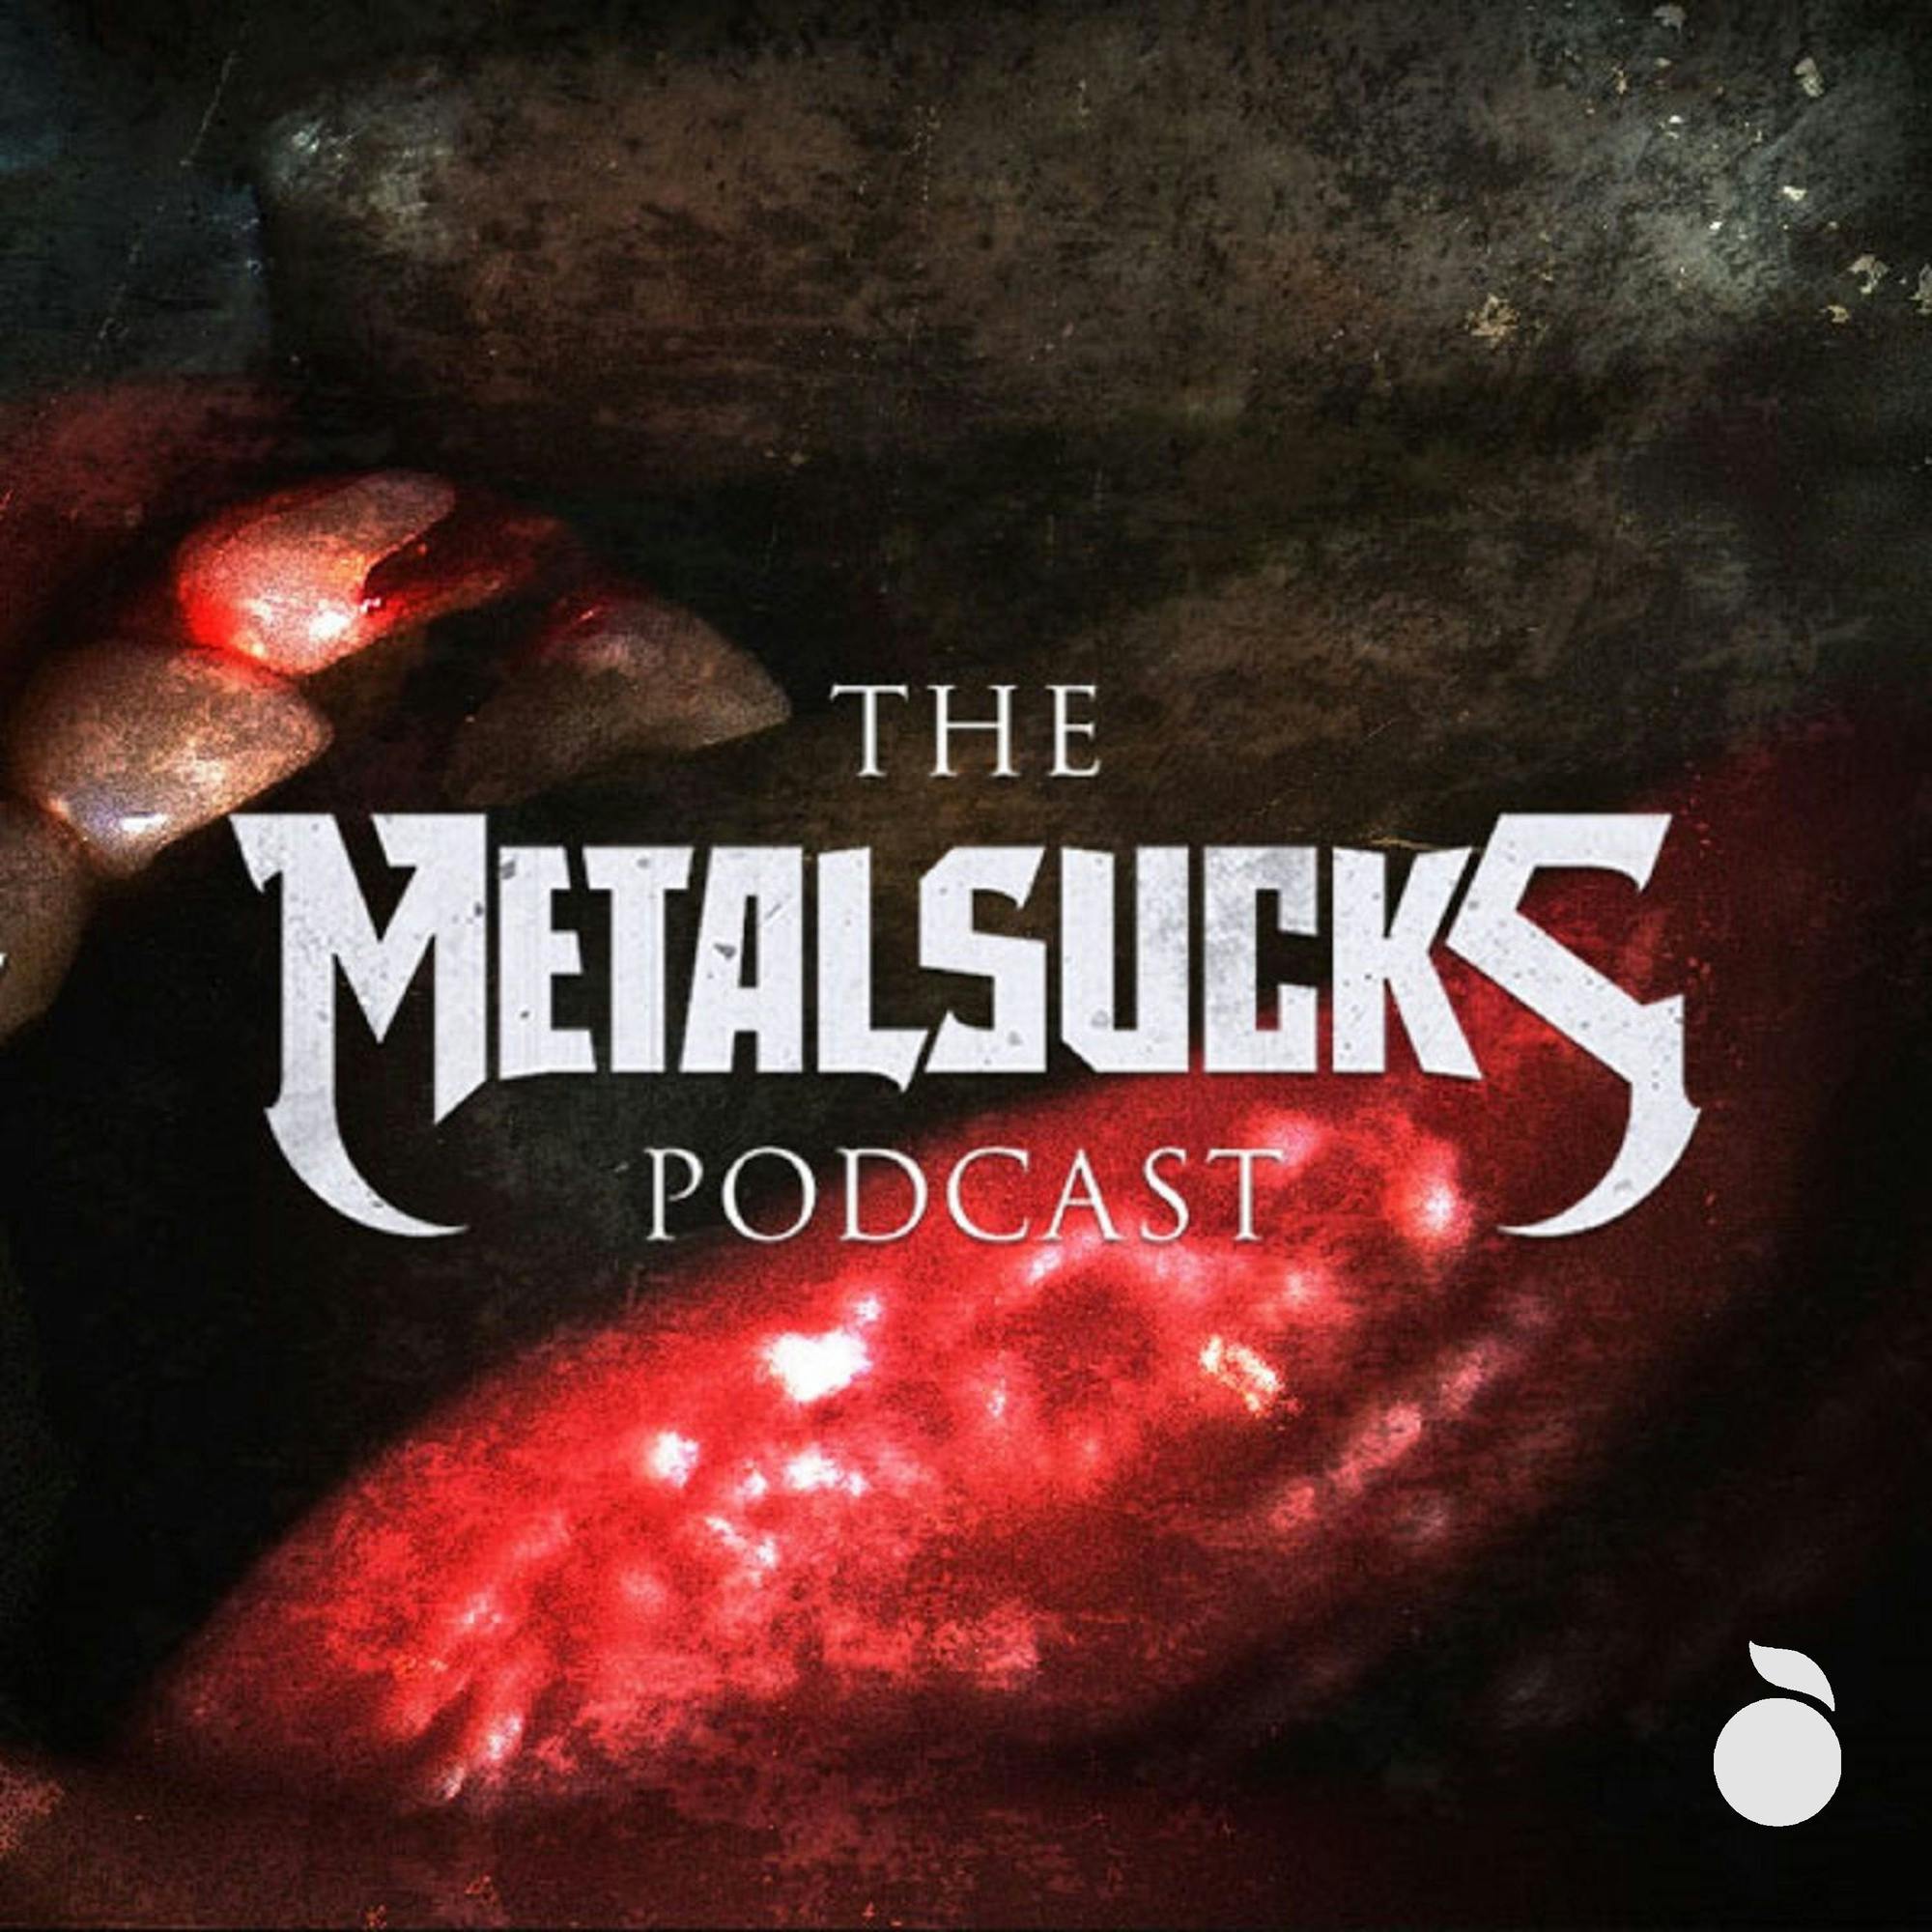 The MetalSucks Podcast